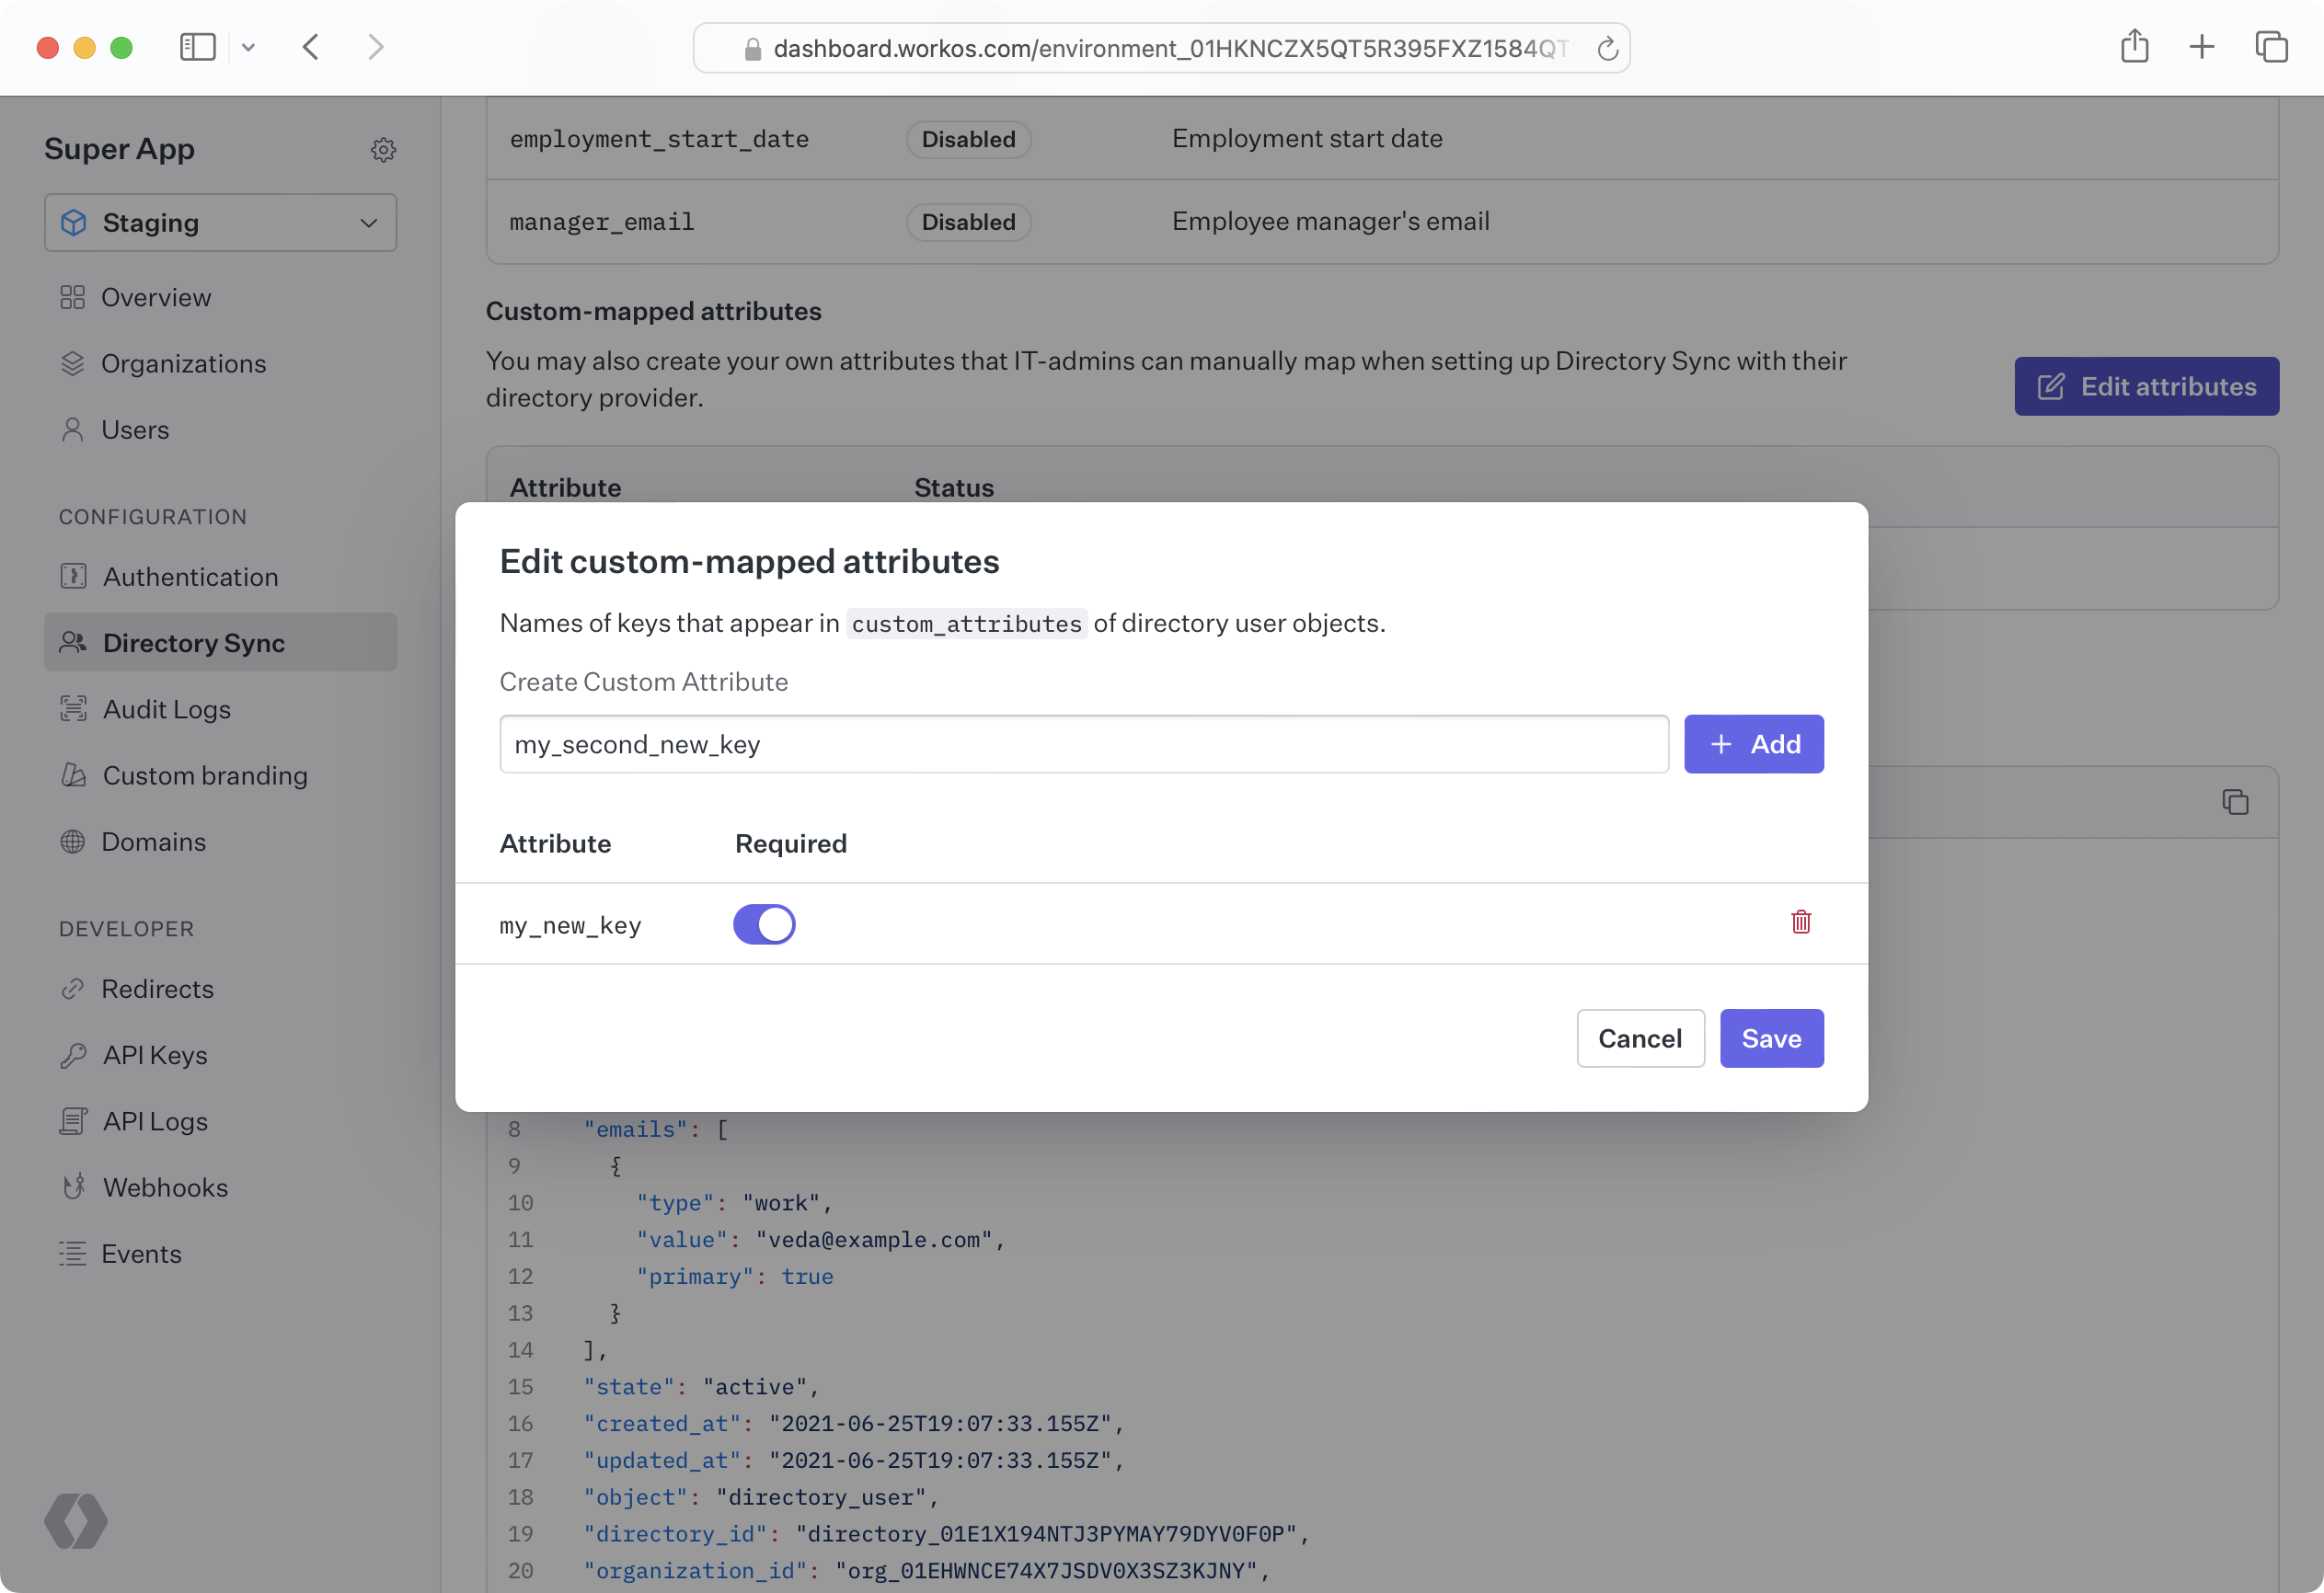 WorkOS Dashboard UI showing custom attribute editing